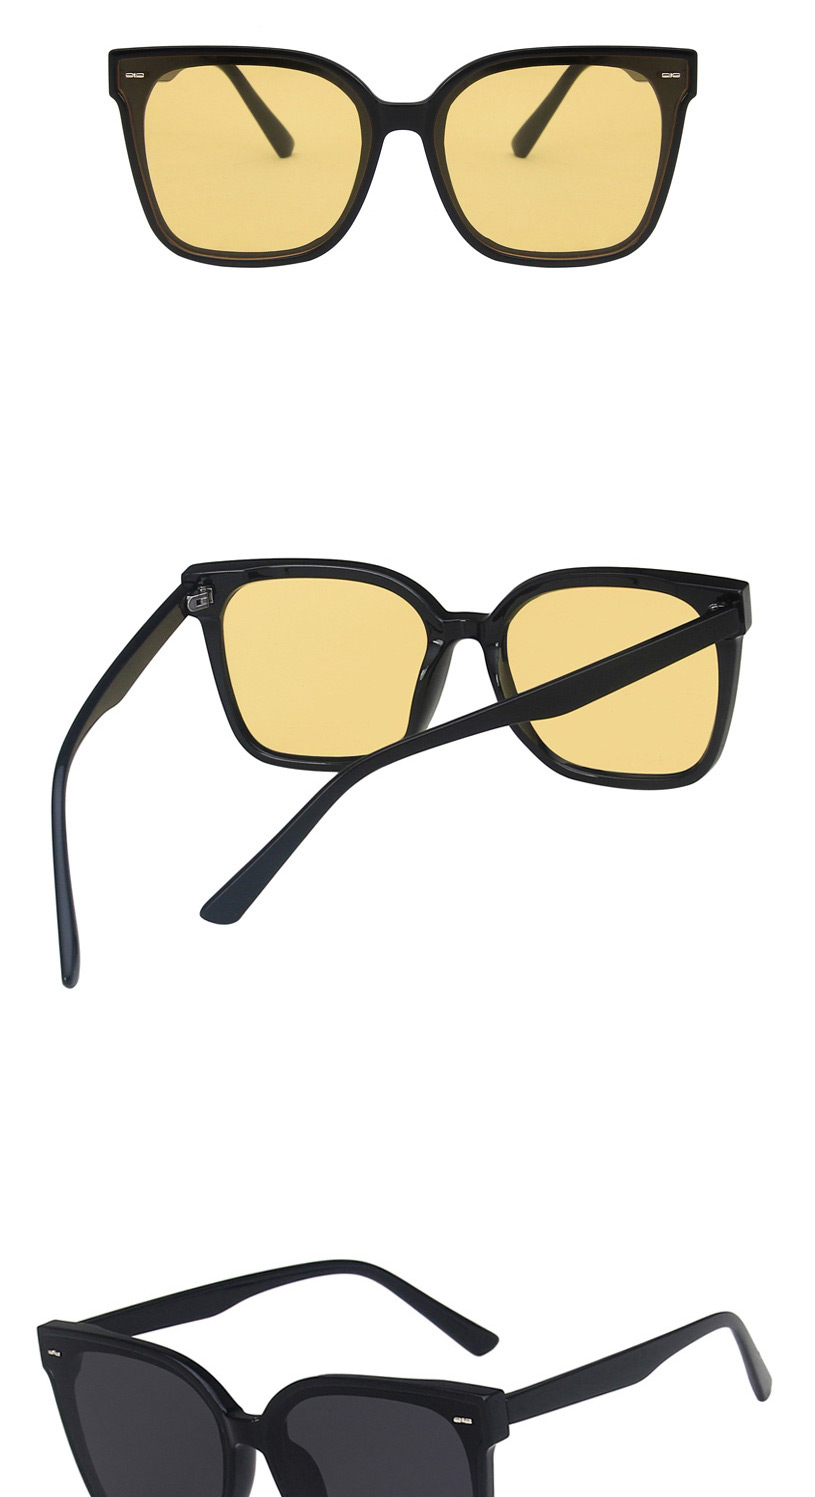 Fashion Bright Black And Yellow Film Square Rice Nail Sunglasses,Women Sunglasses